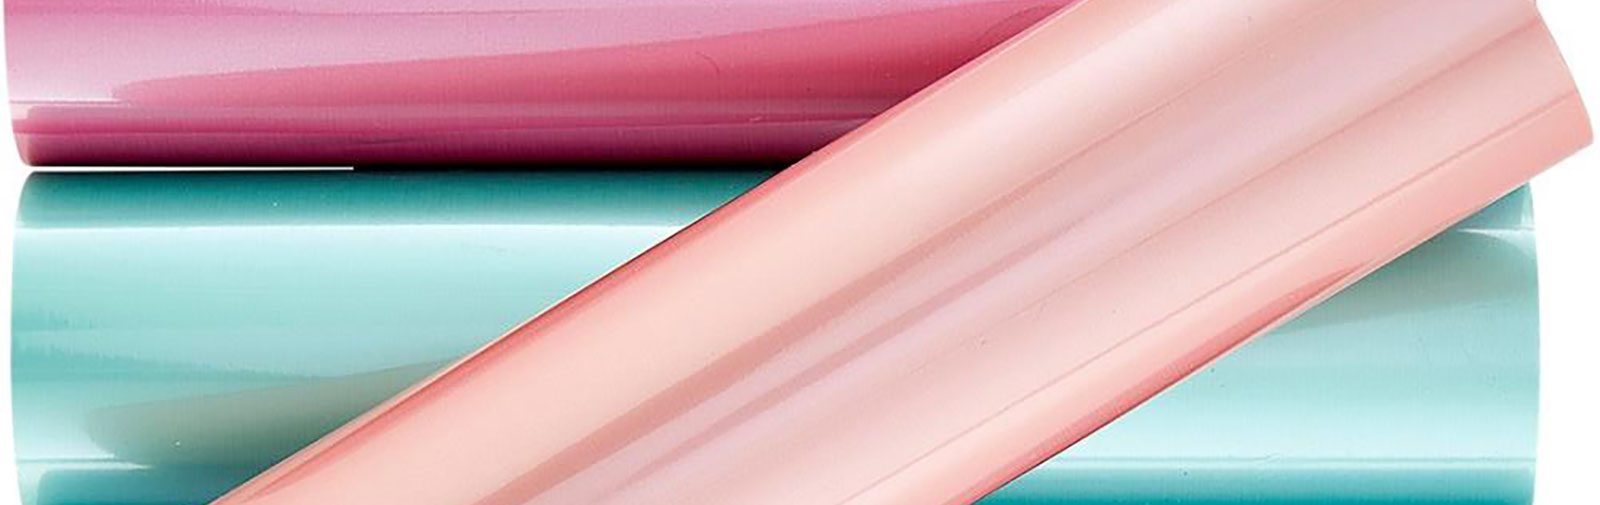 SPELLBINDERS: Glimmer Foil | Satin Pastels Variety Pack